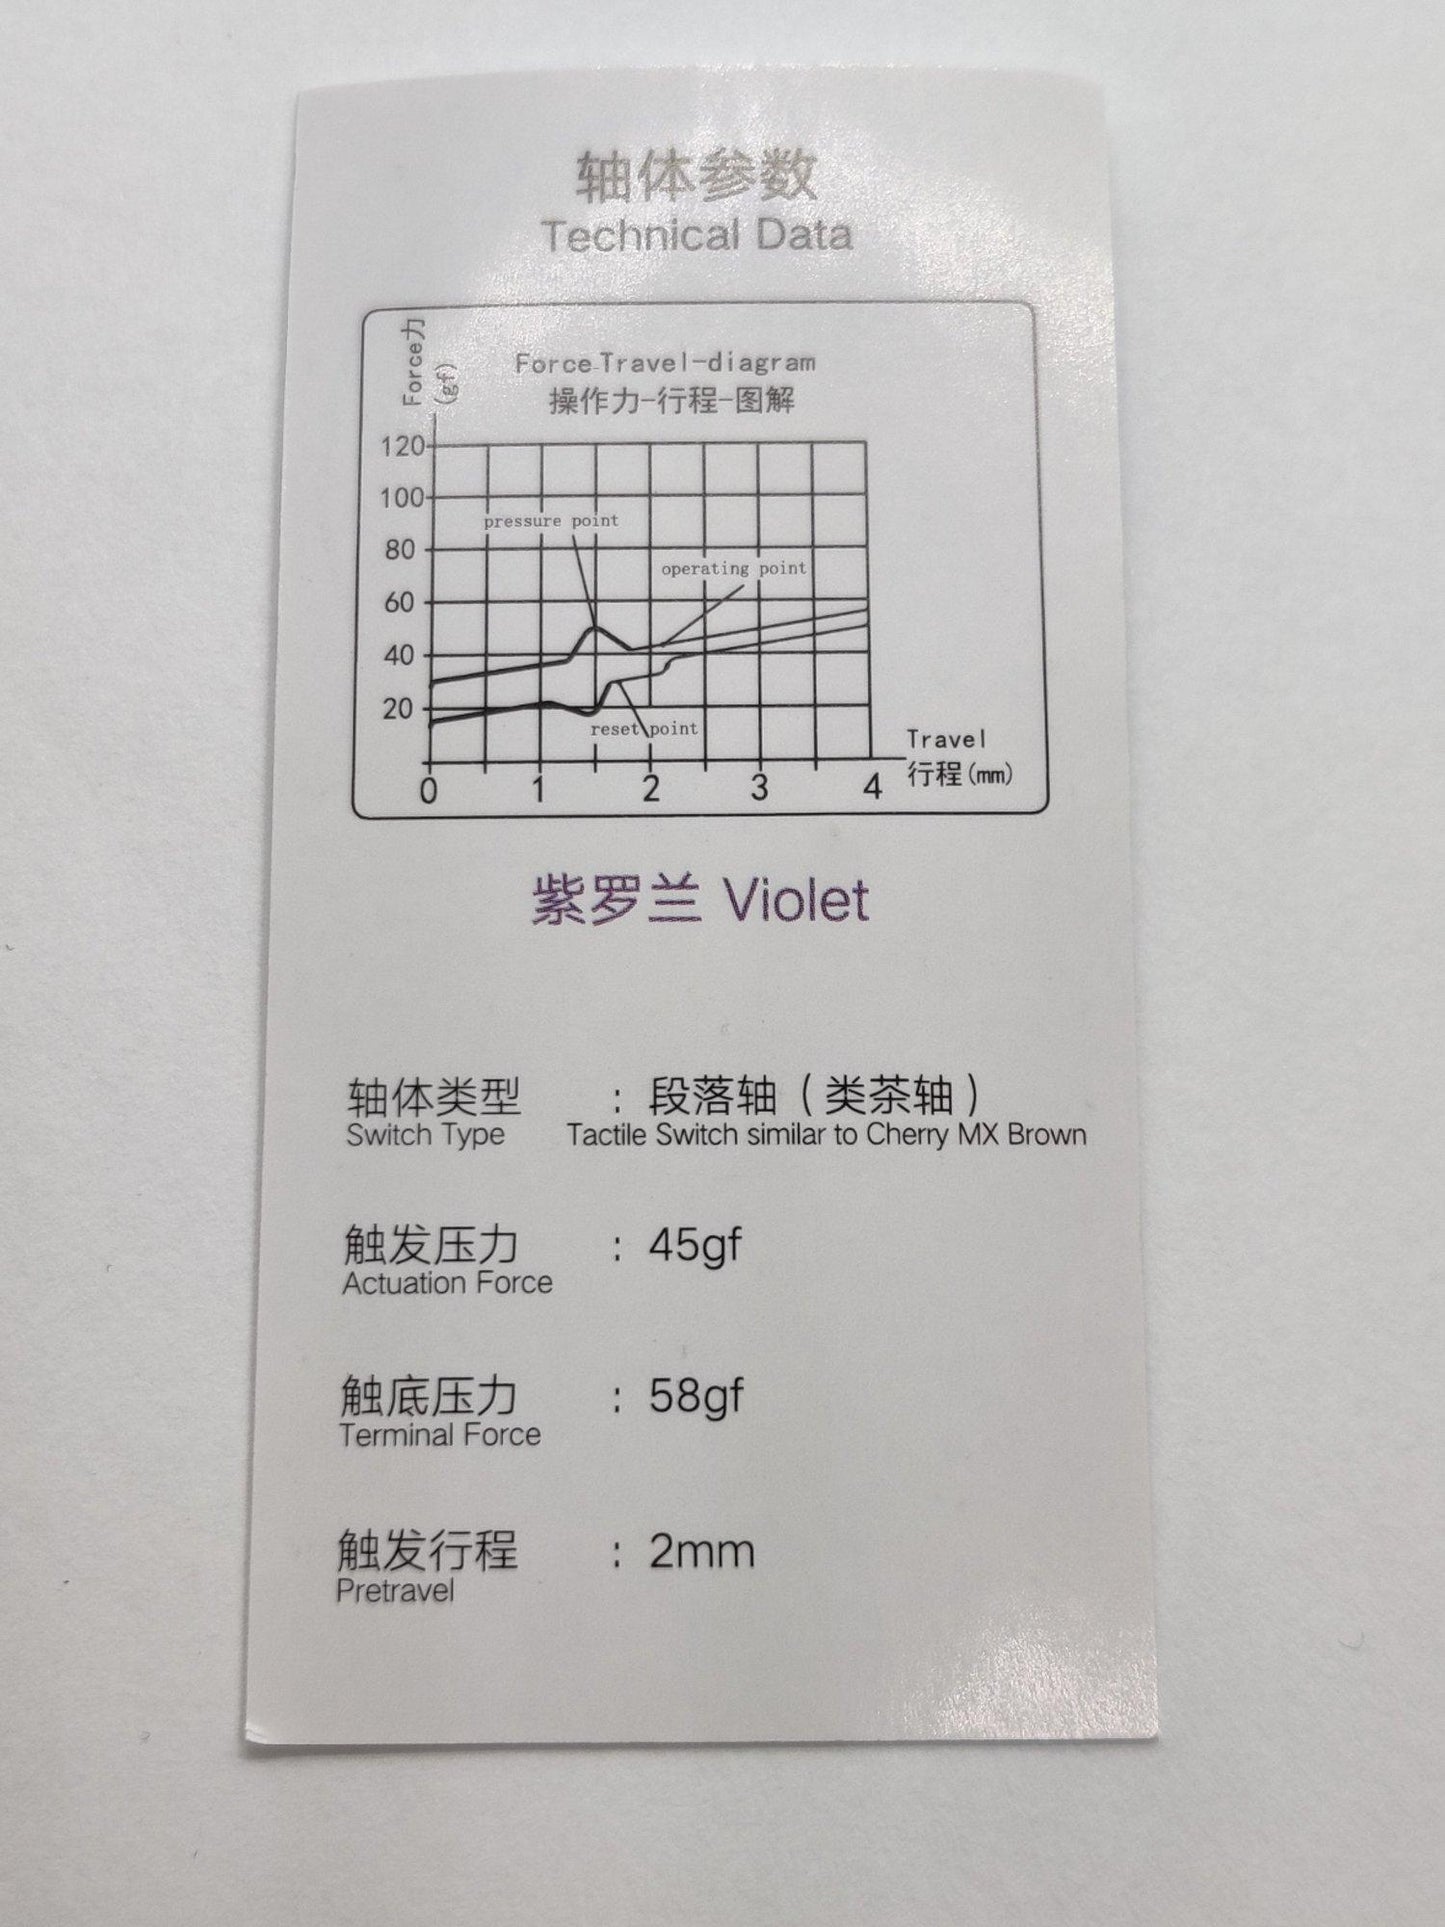 Varmilo EC V2 Violet